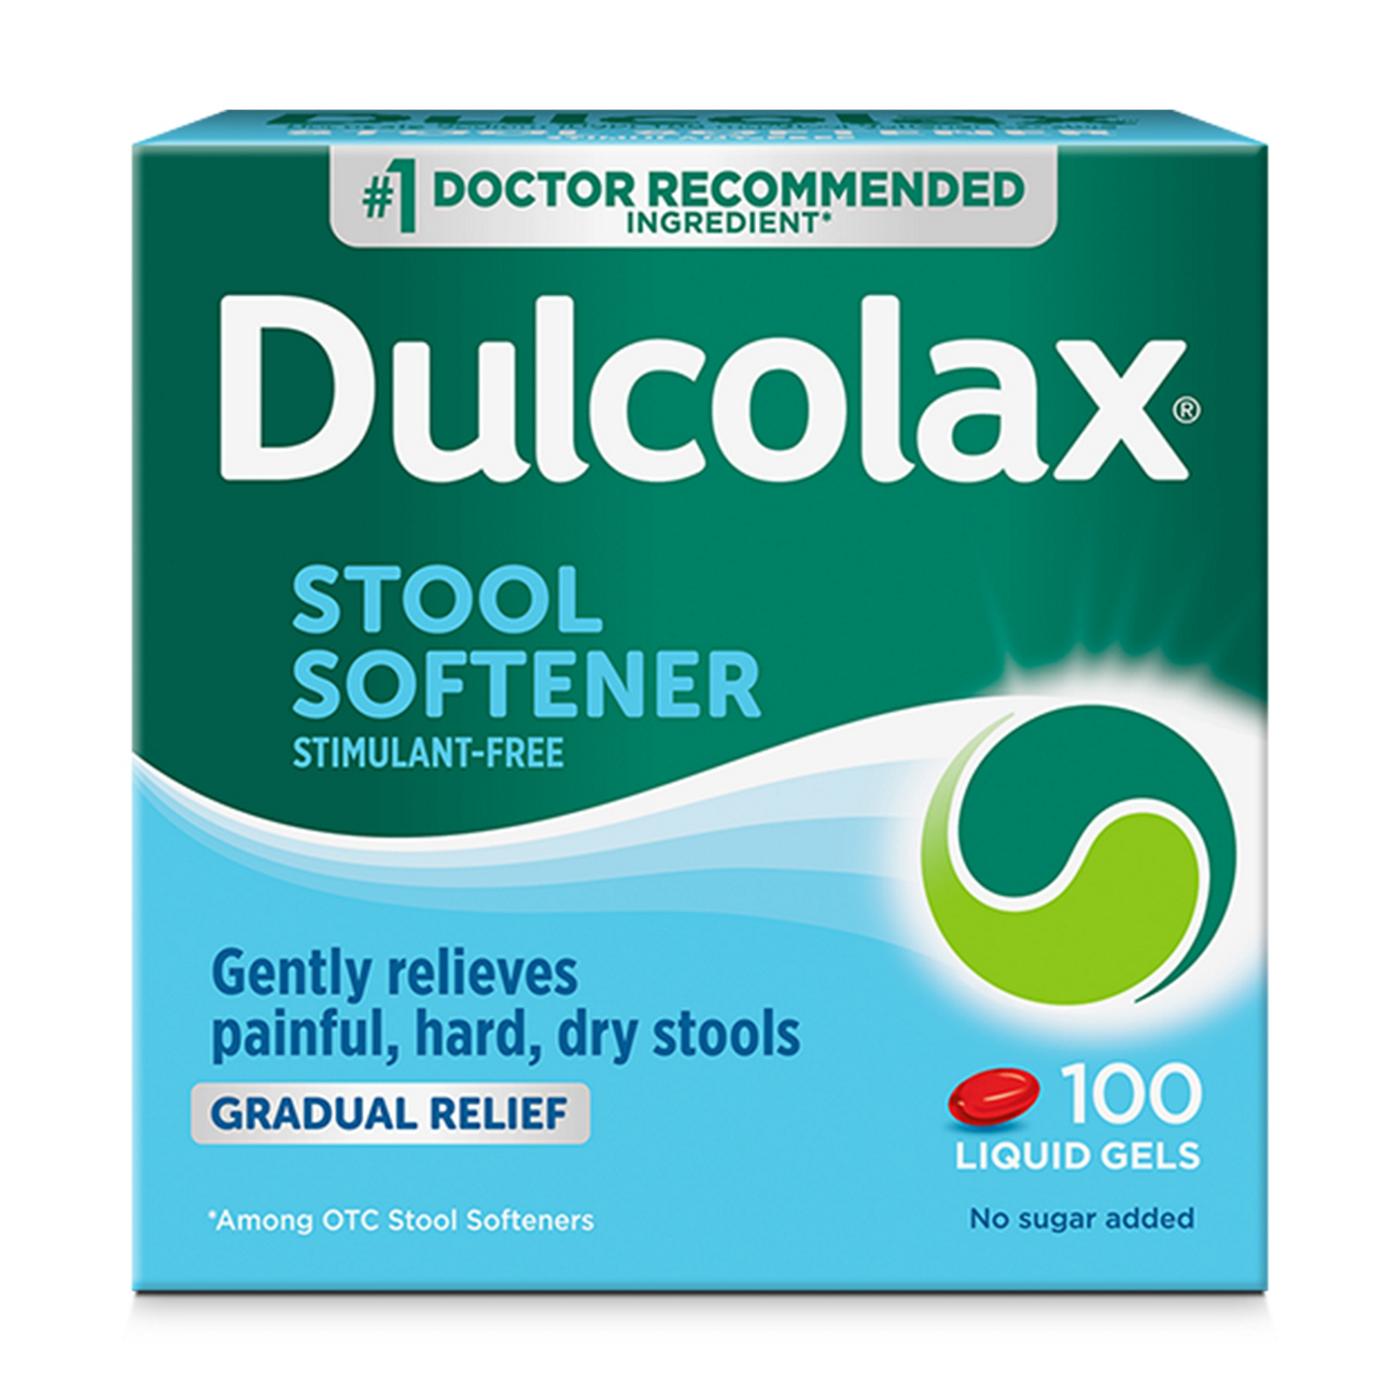 Dulcolax Stool Softener Liquid Gels; image 1 of 12